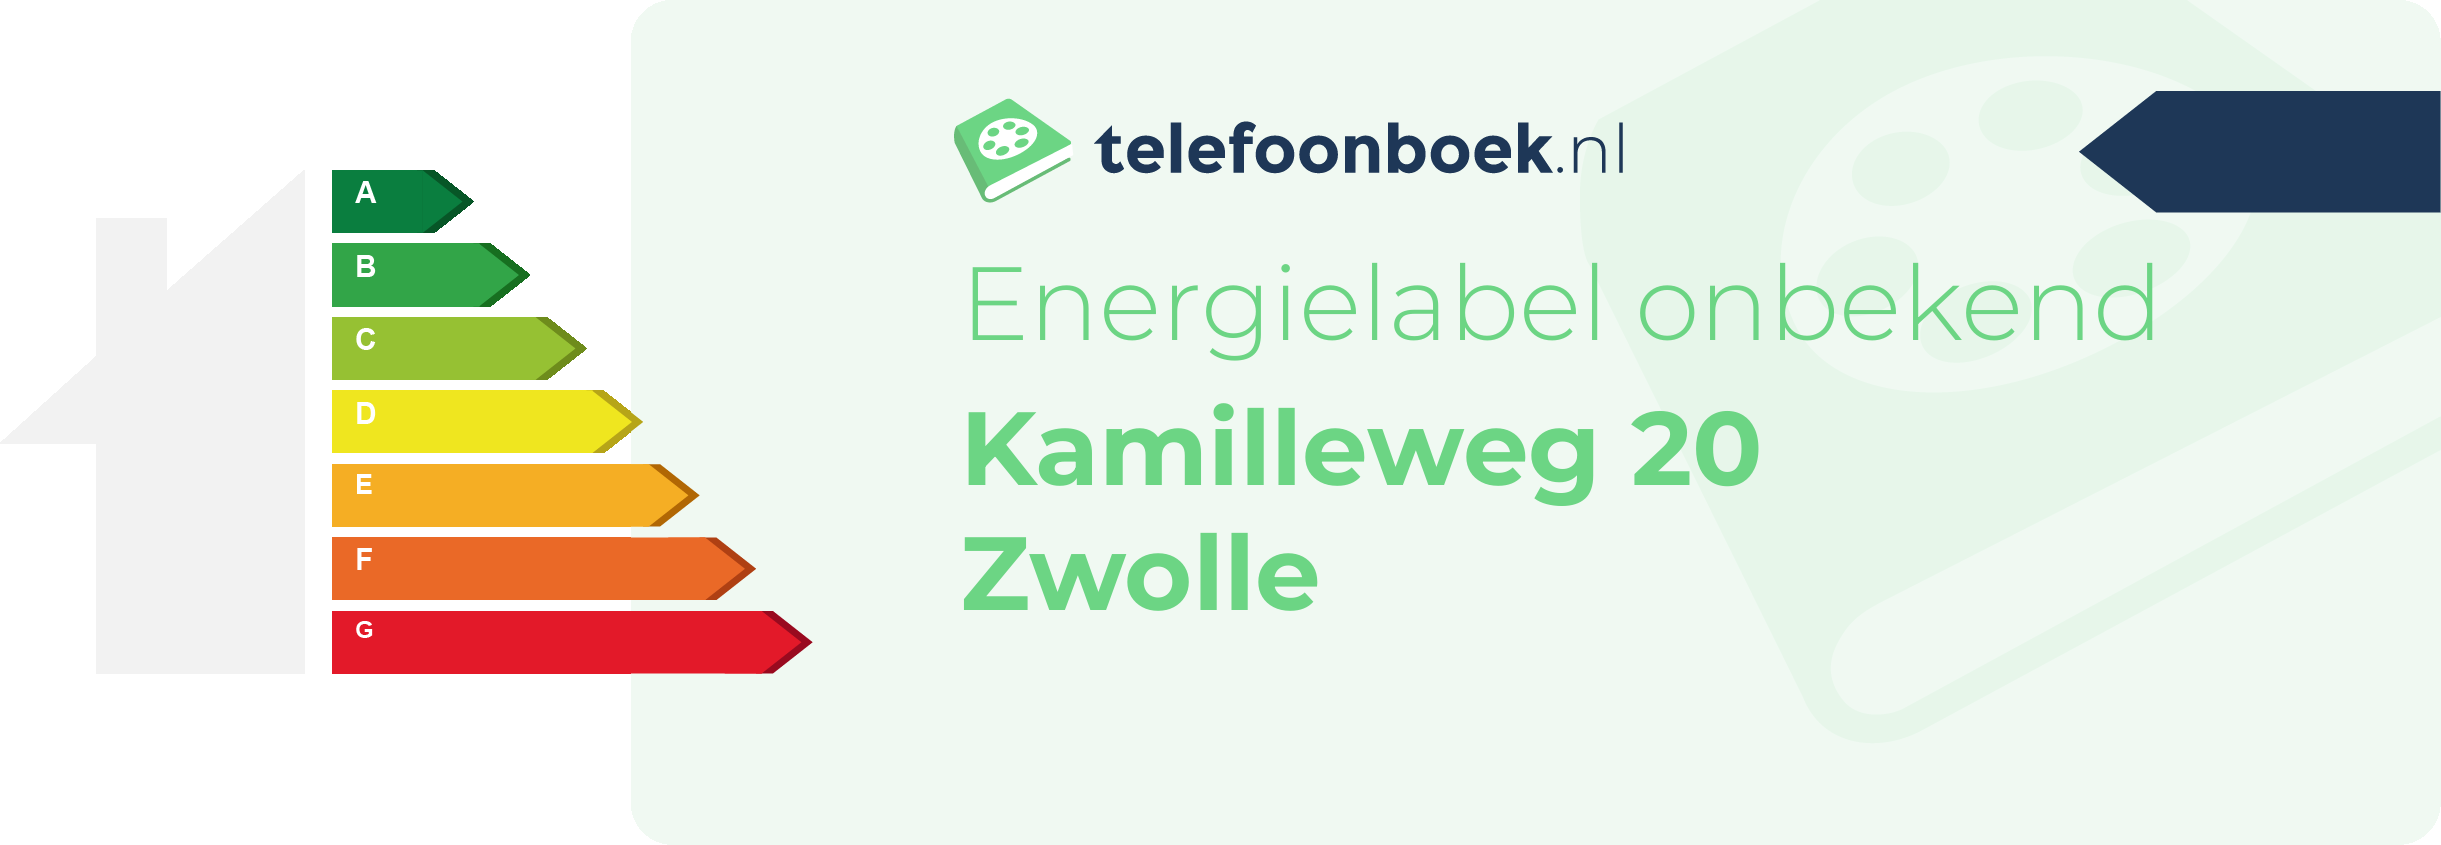 Energielabel Kamilleweg 20 Zwolle